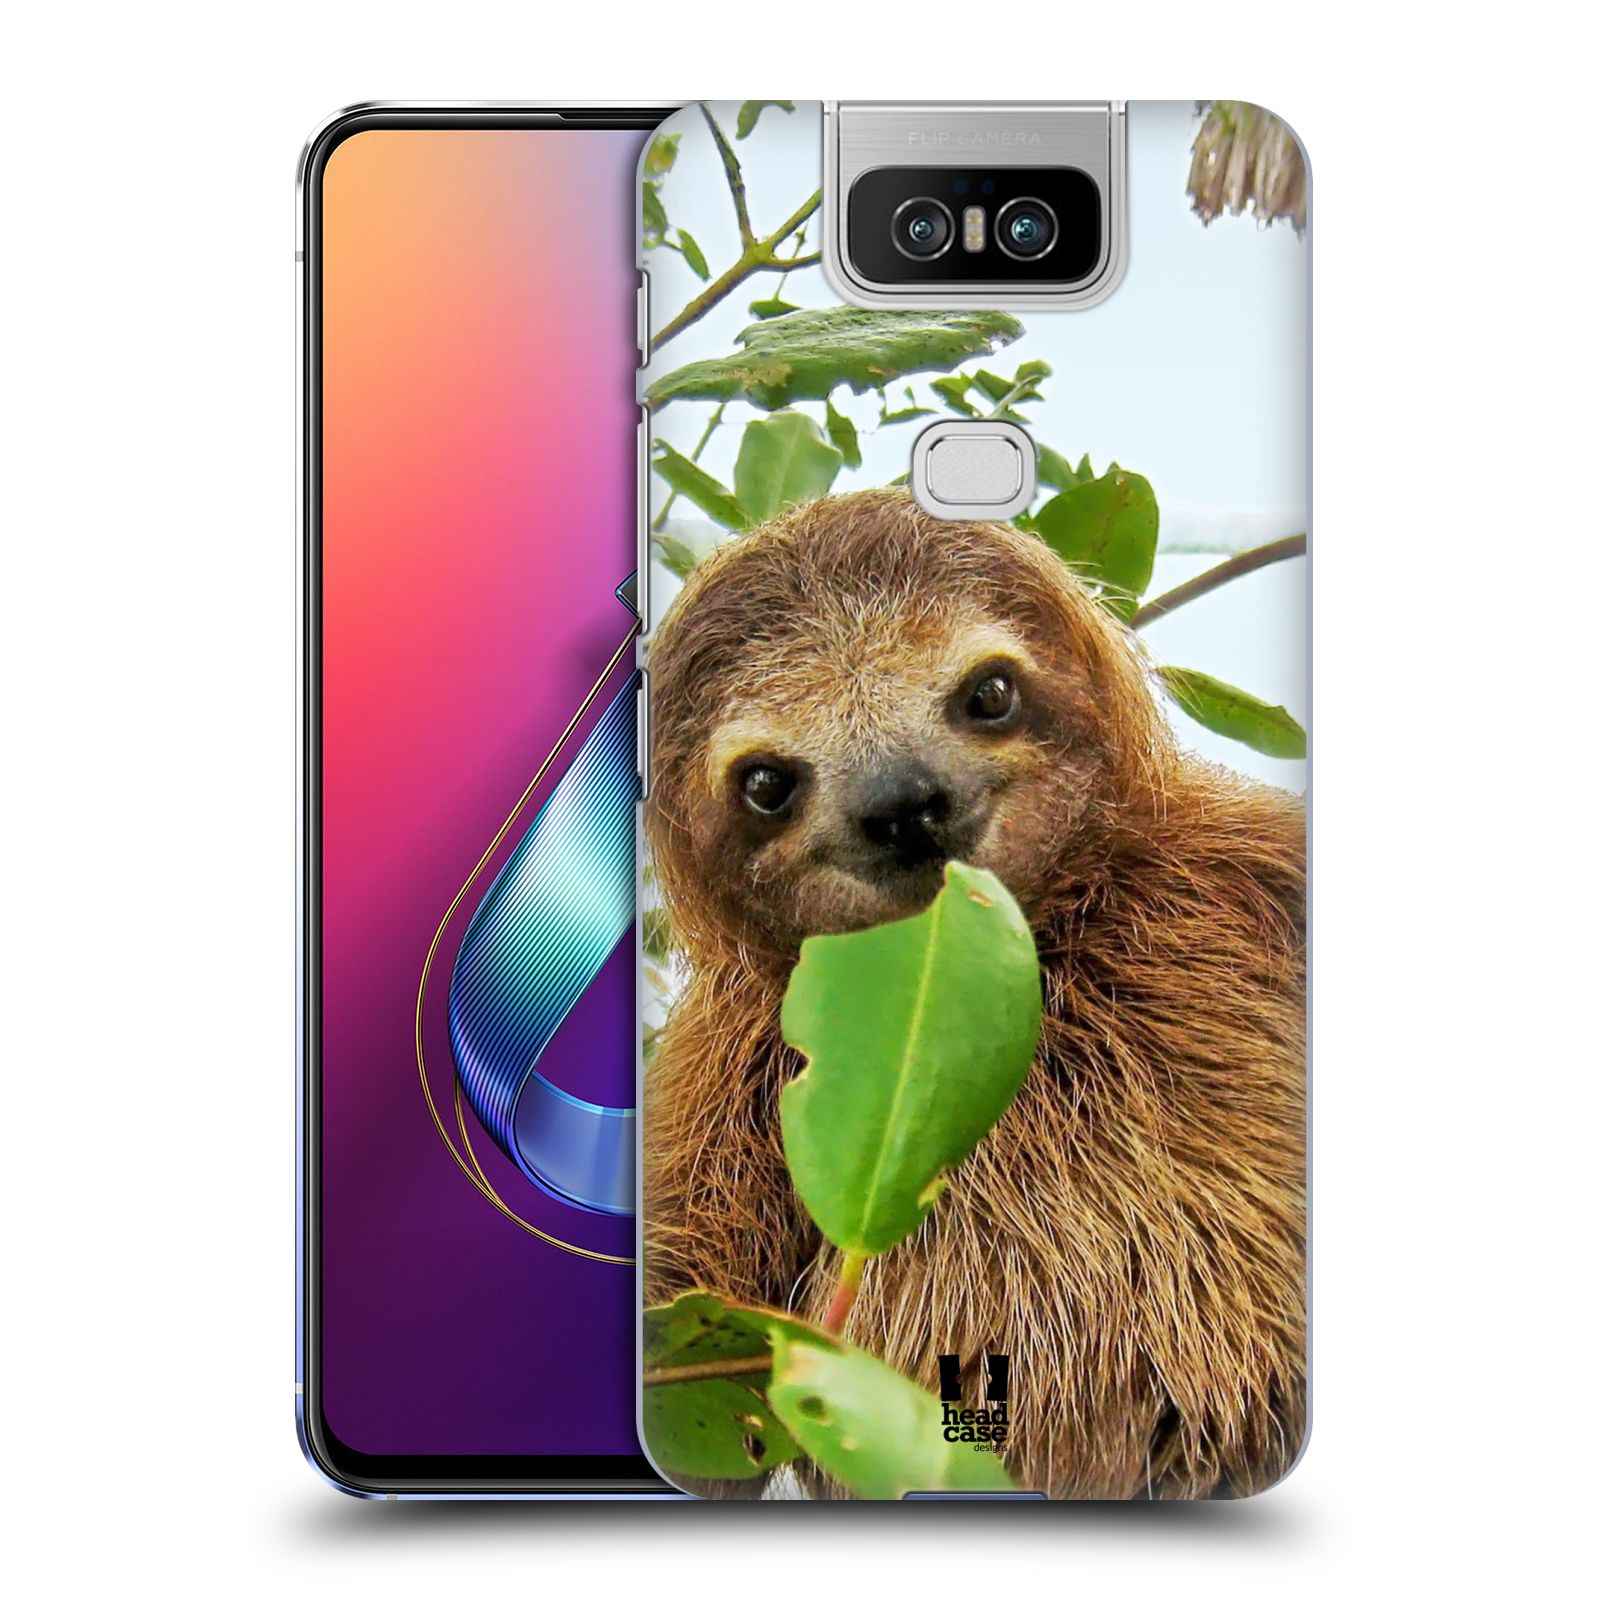 Pouzdro na mobil Asus Zenfone 6 ZS630KL - HEAD CASE - vzor slavná zvířata foto lenochod